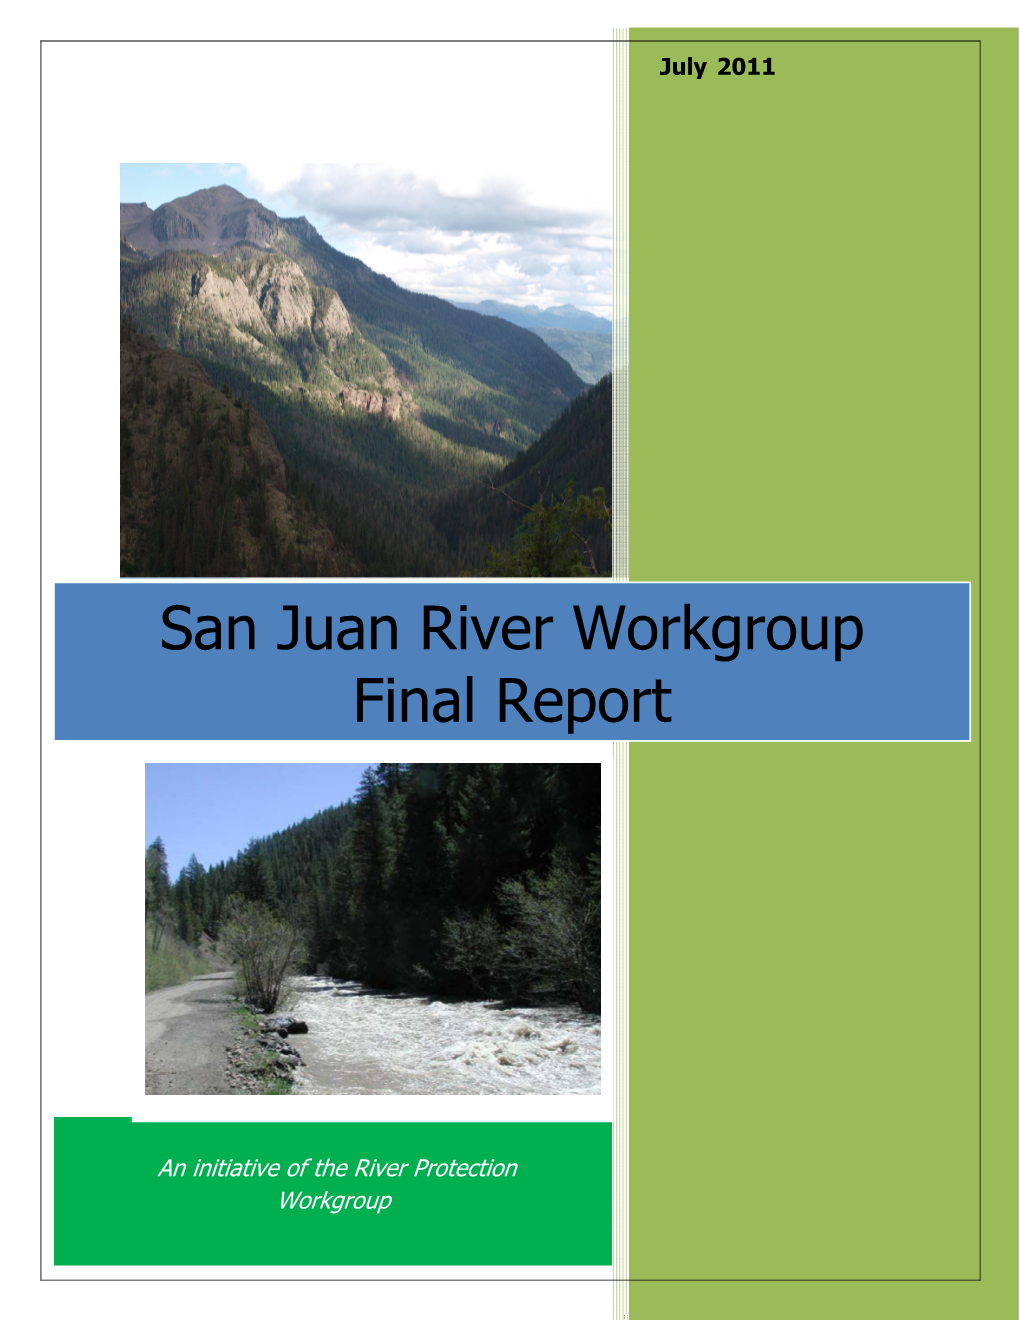 San Juan River Workgroup Final Report